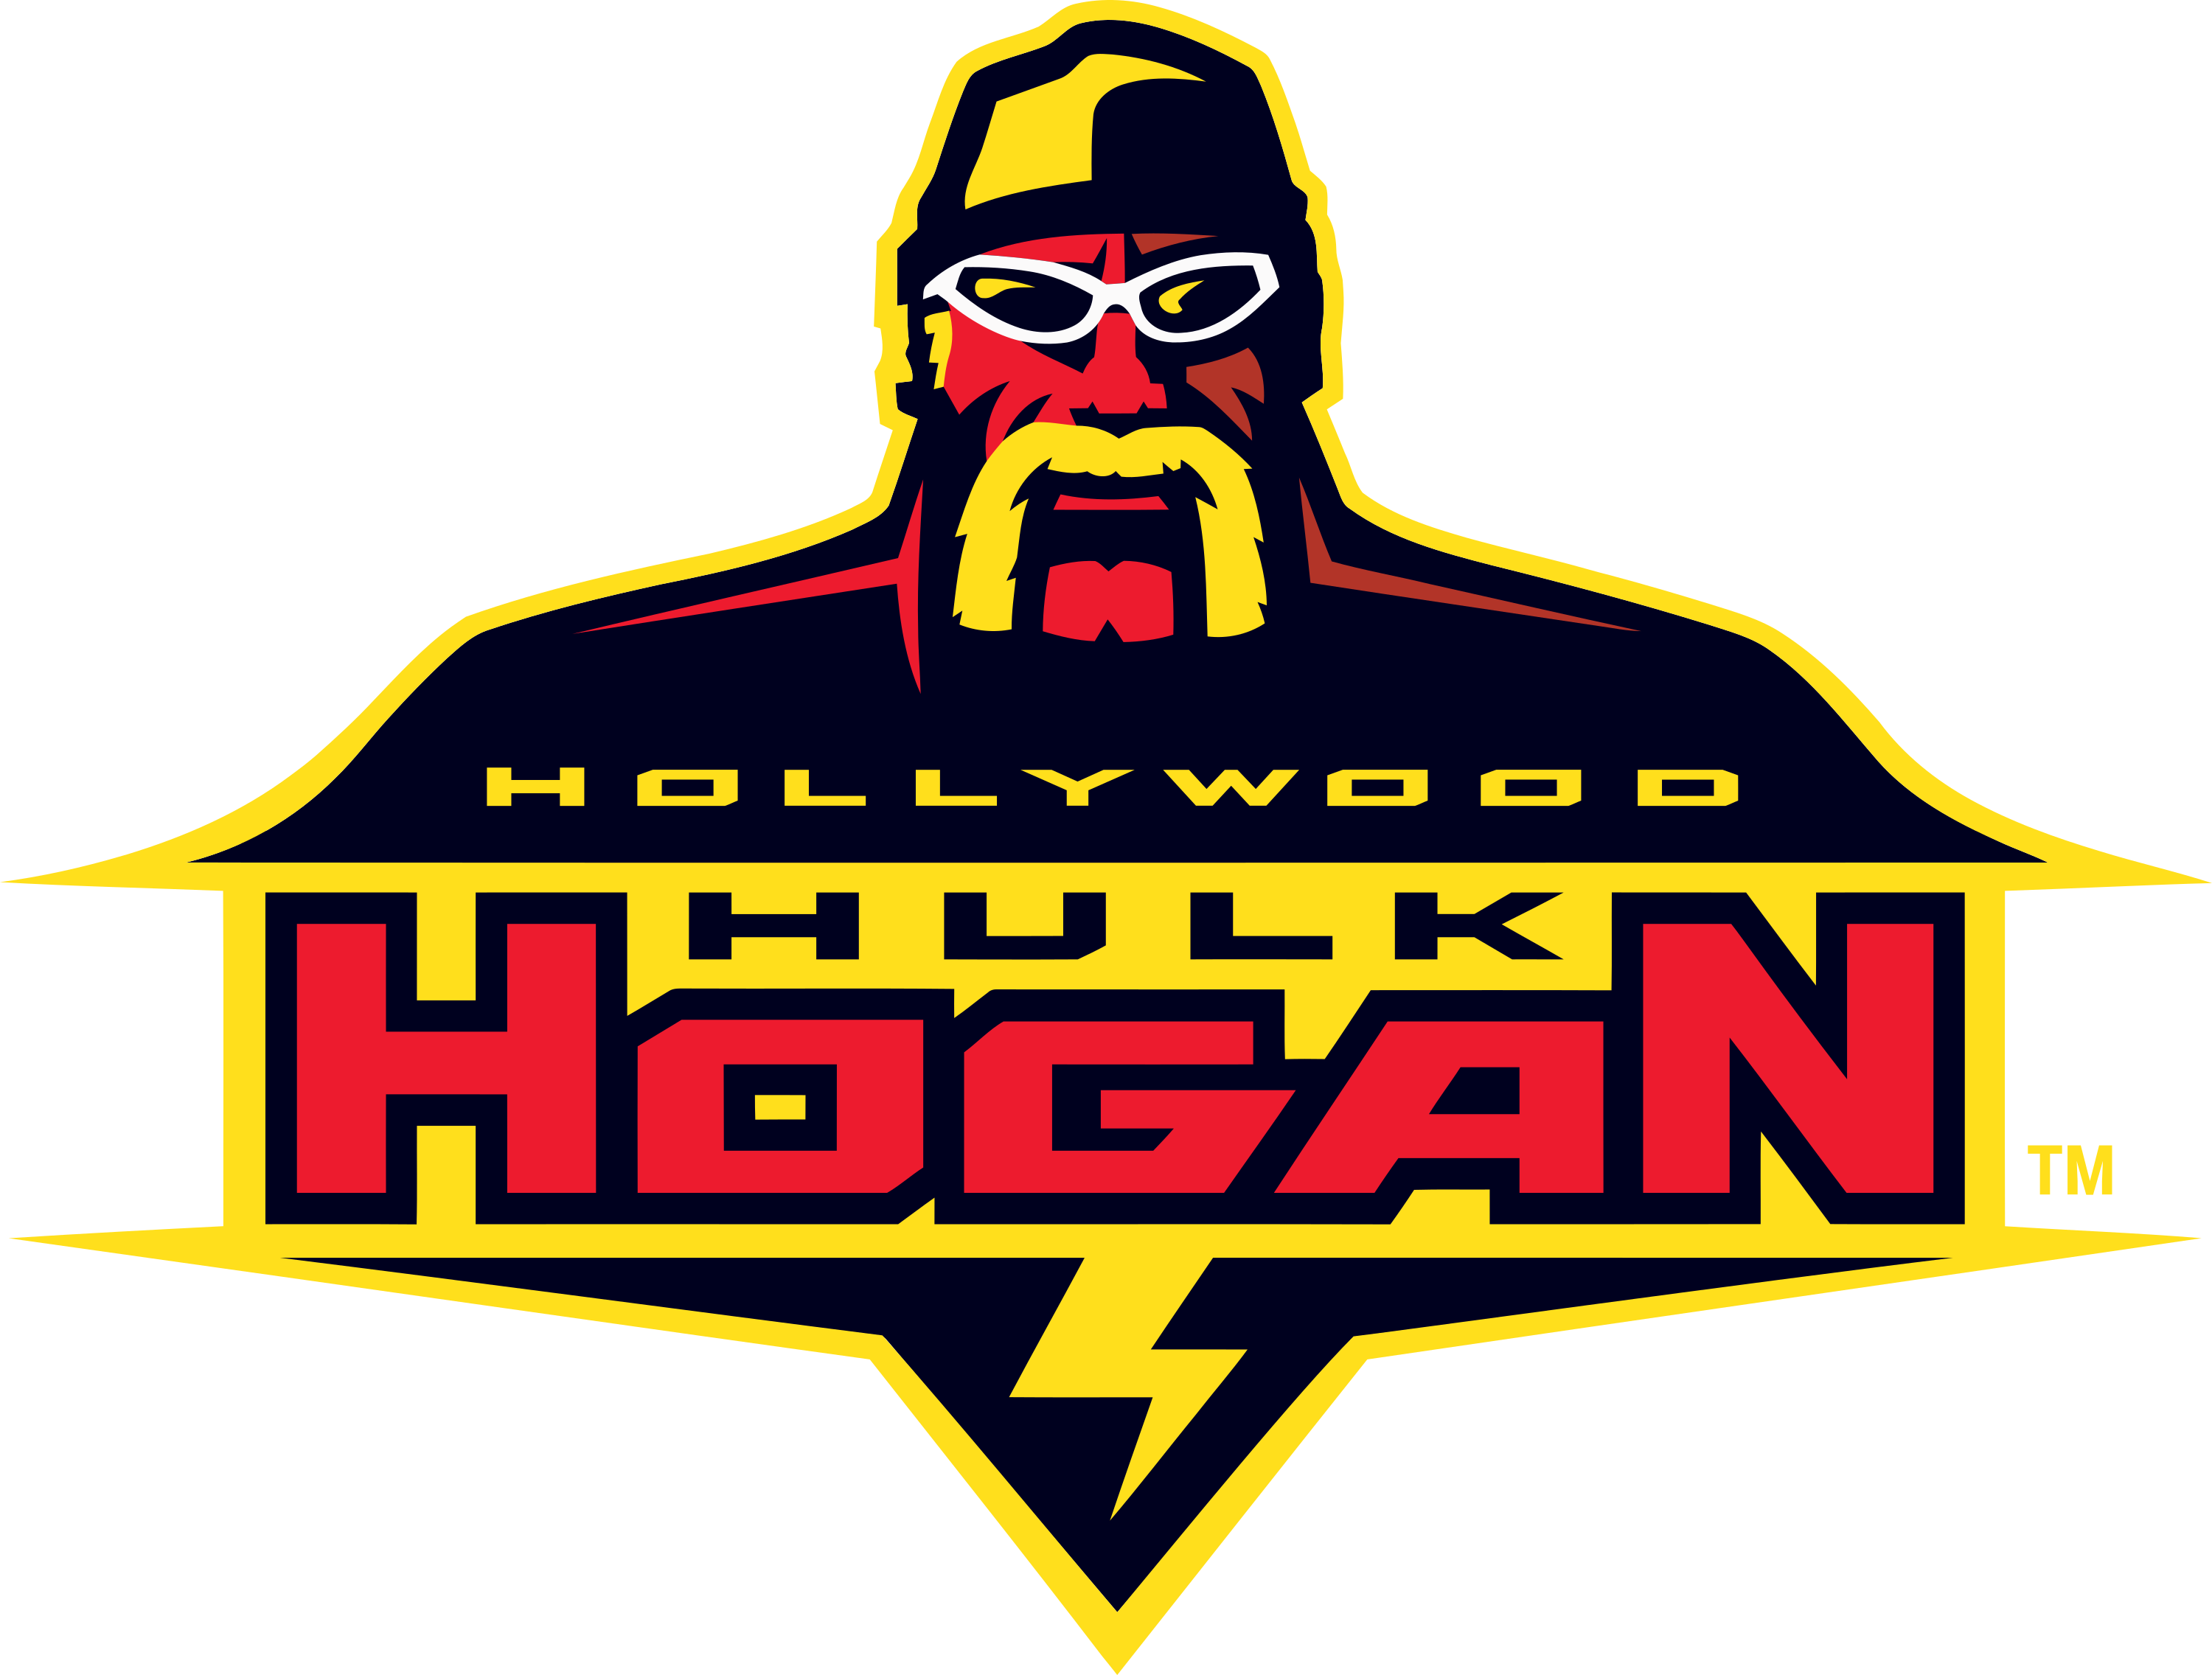 WWE/F Hollywood Hulk Hogan 2002 Logo 1 by EdgeRulz17 on DeviantArt